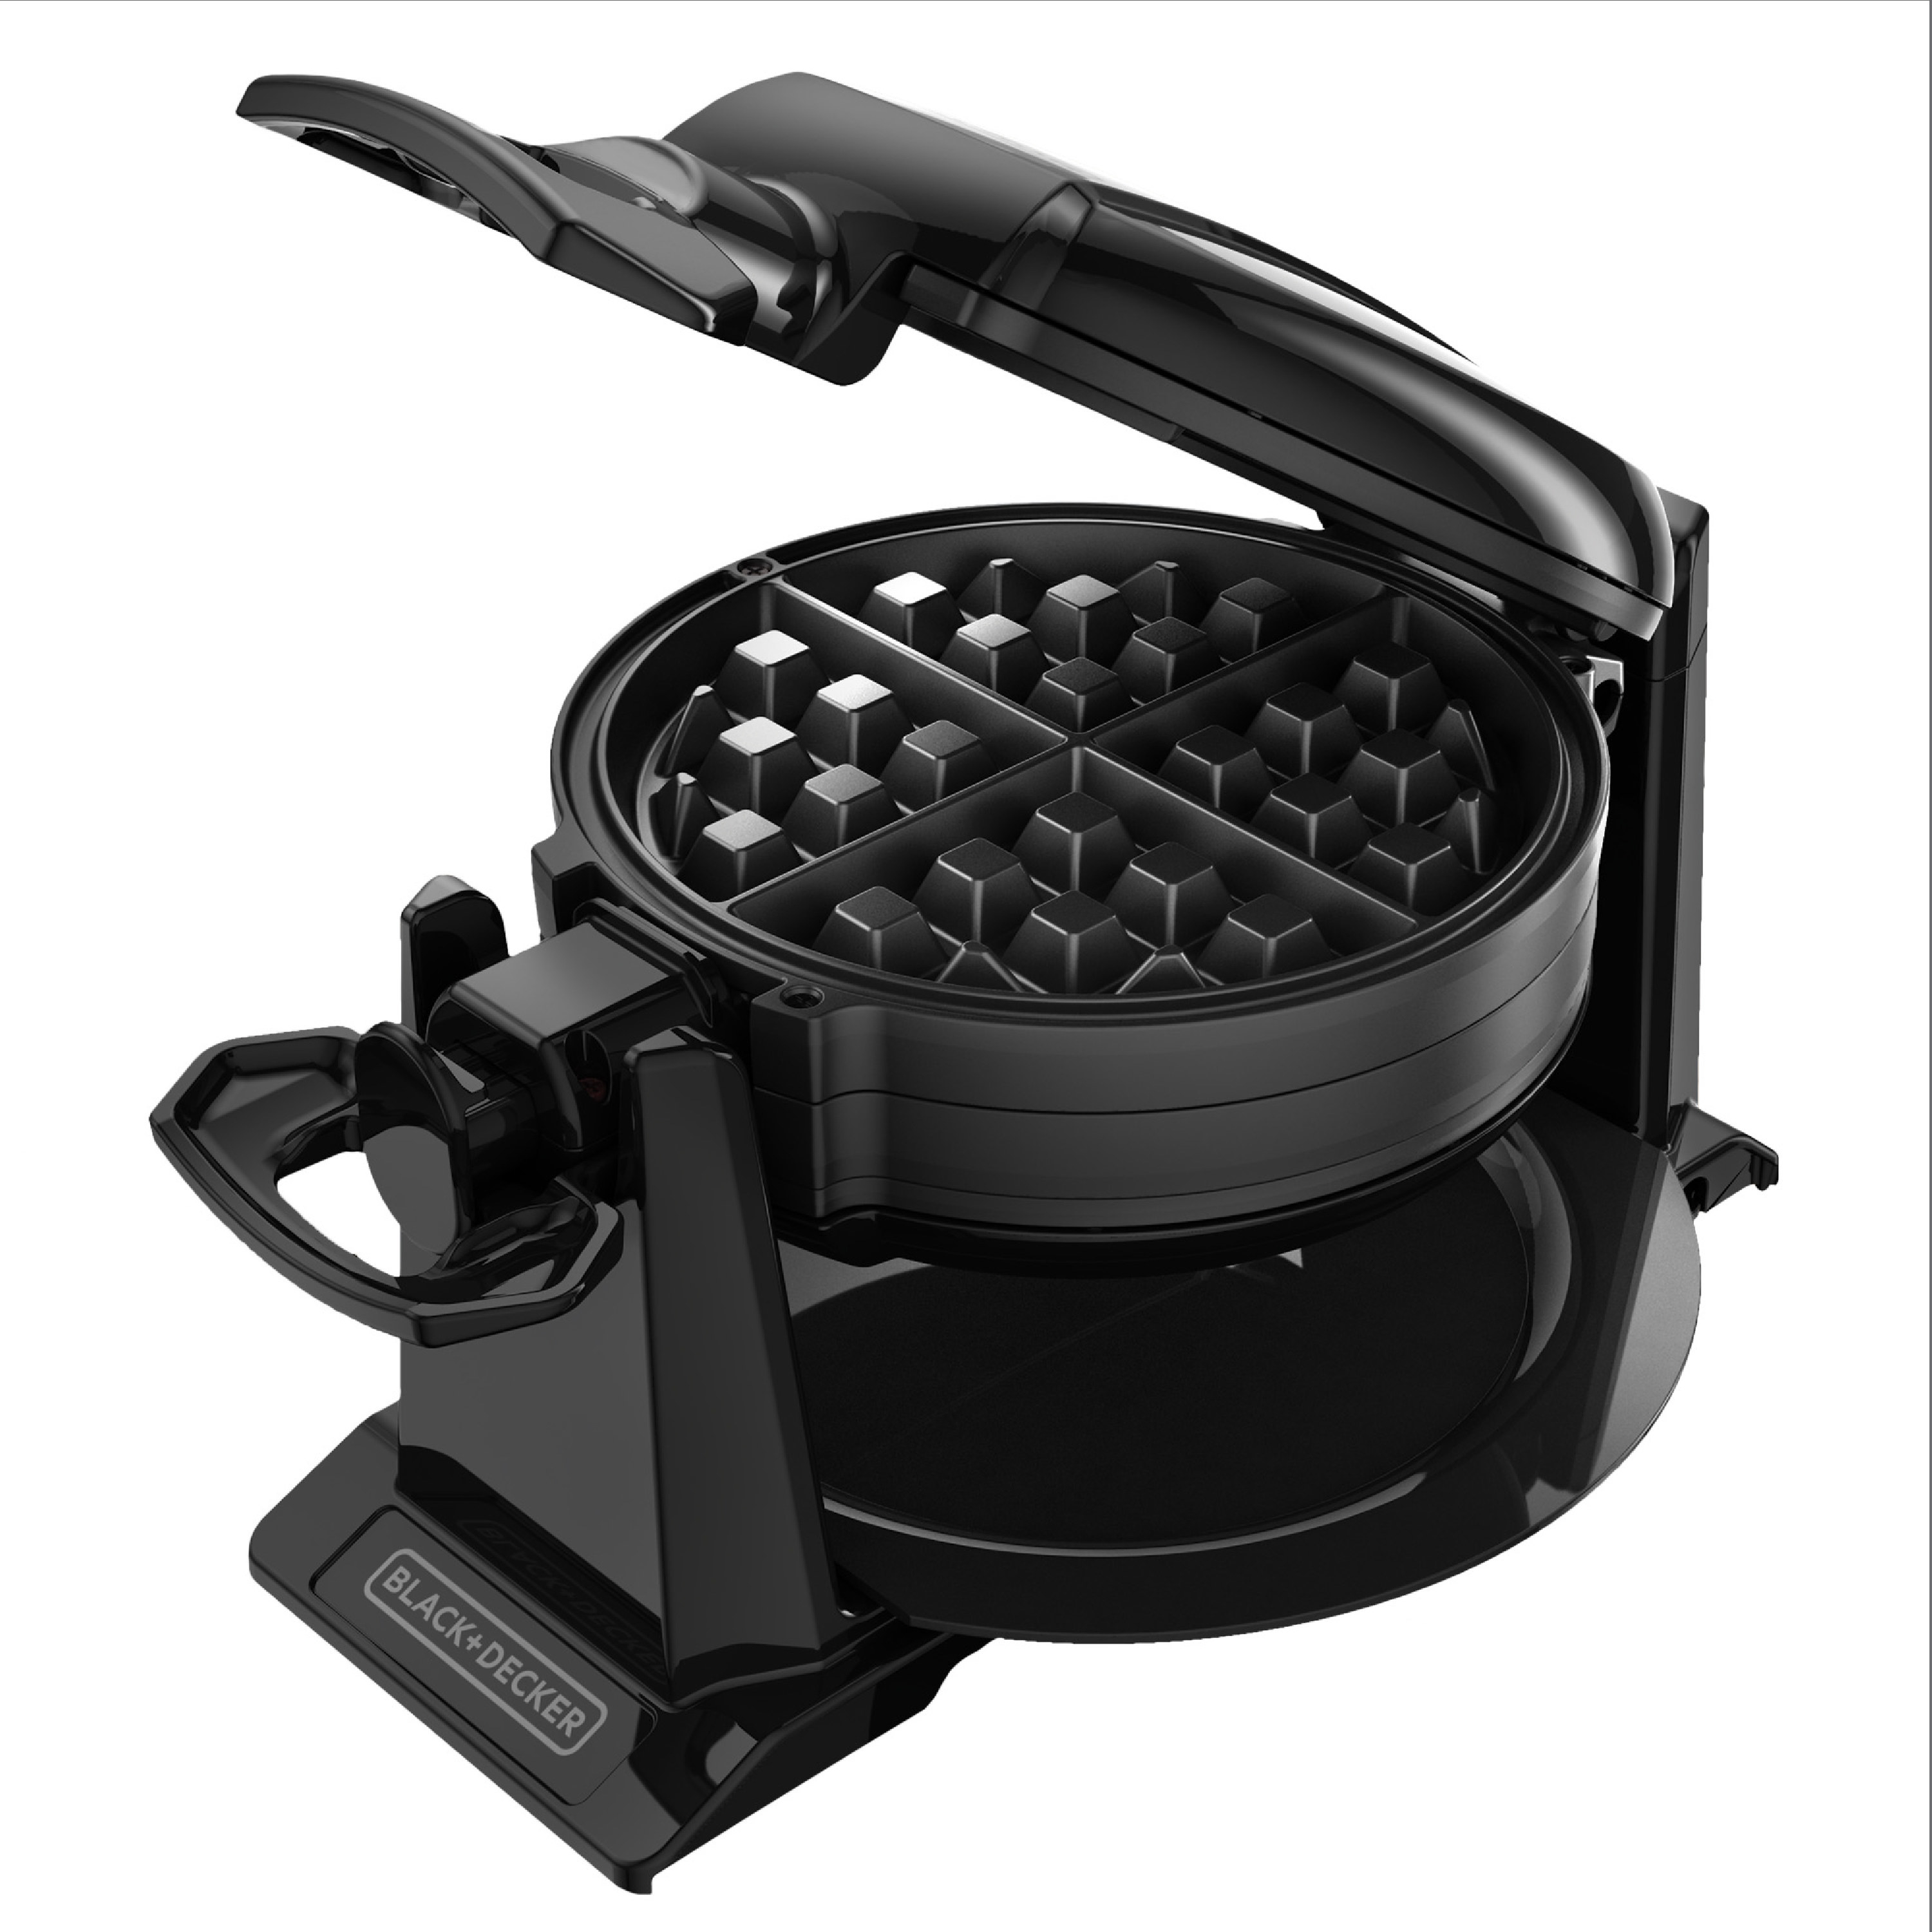 The black double-flip rotating waffle maker